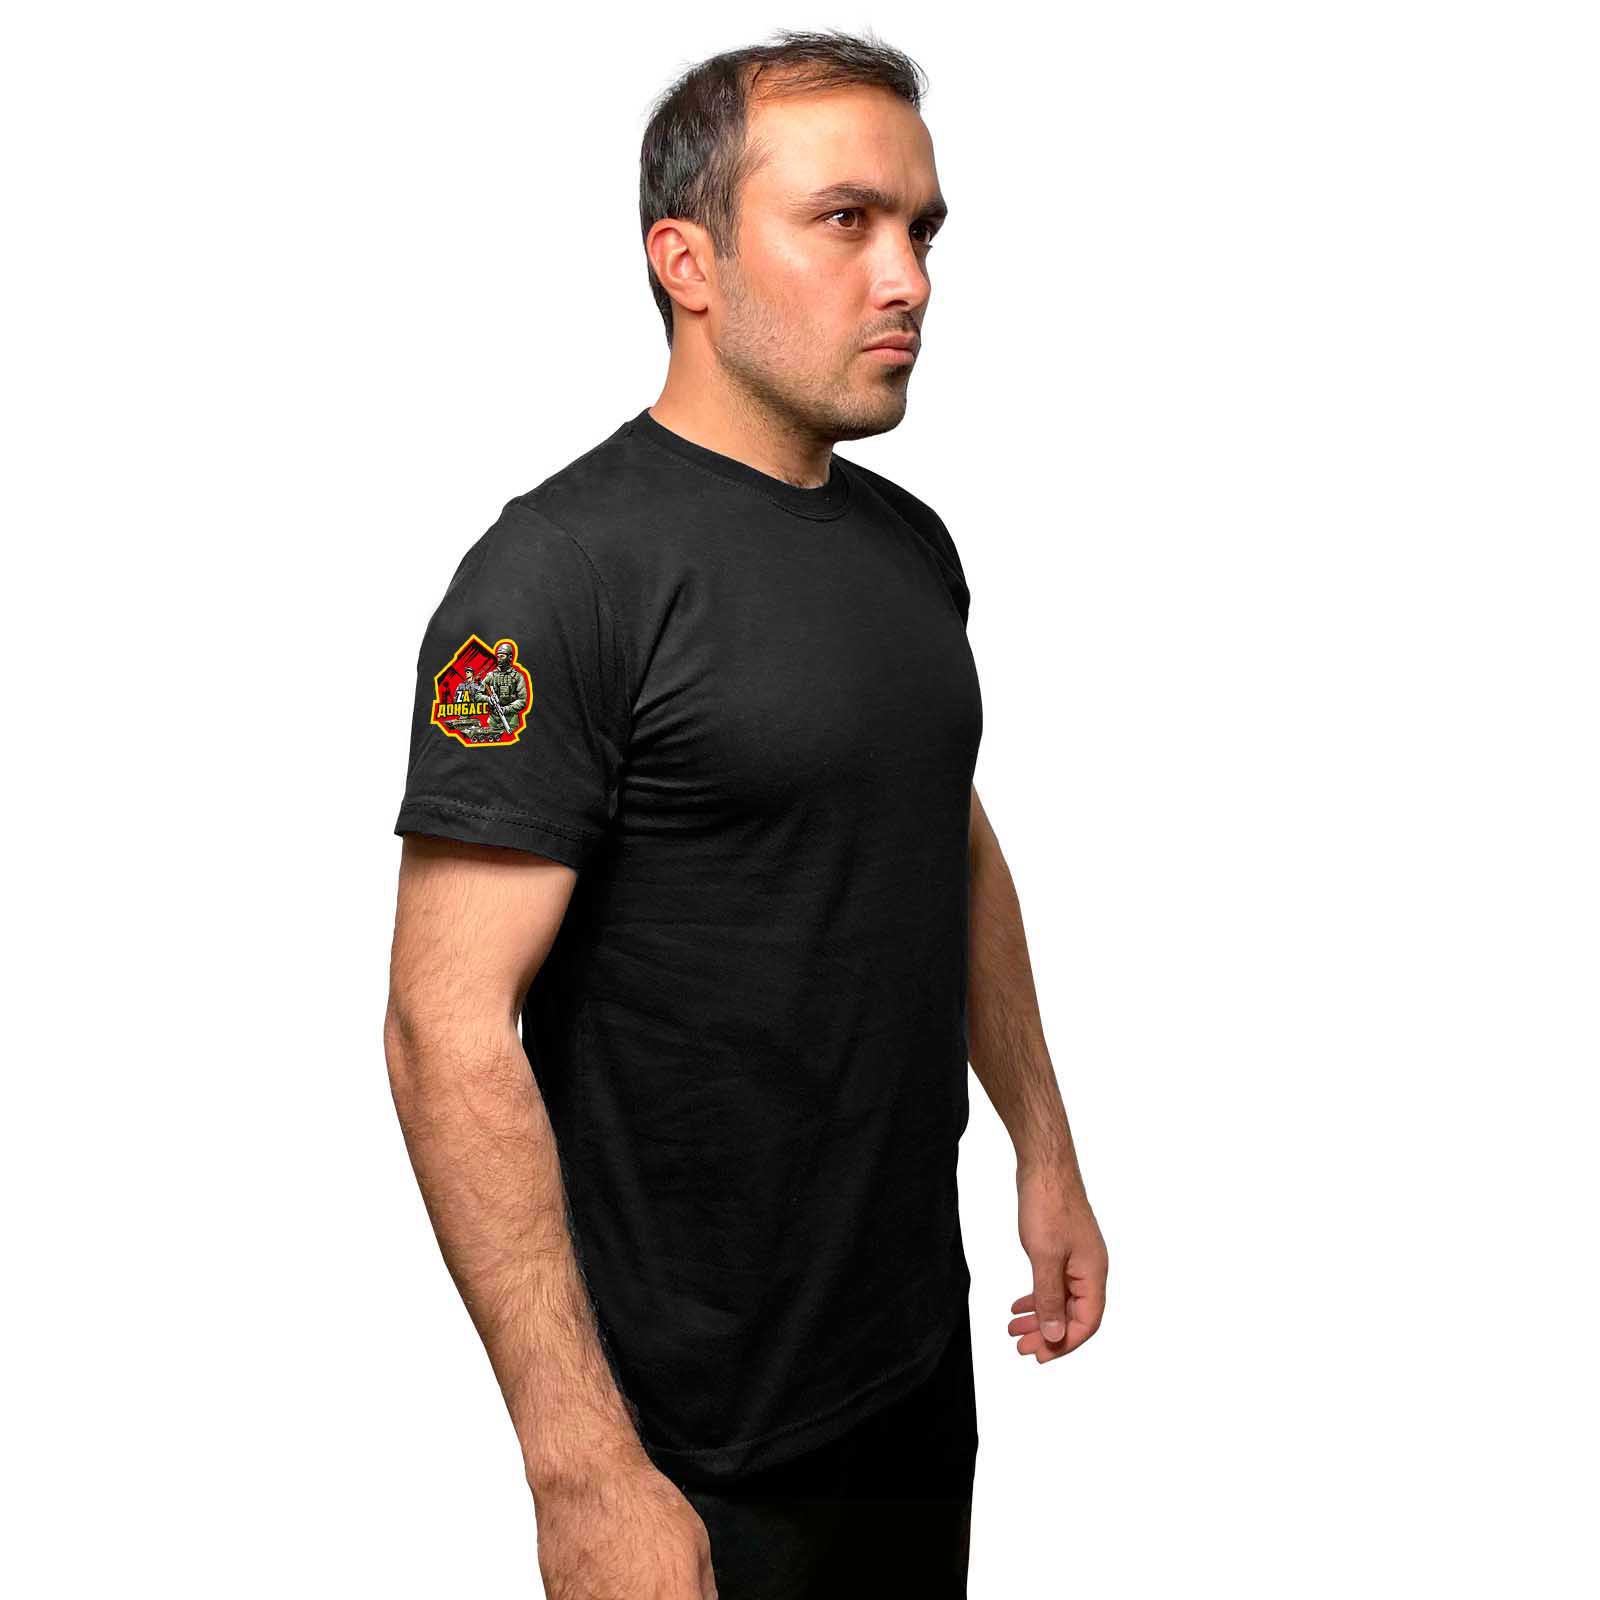 Чёрная футболка с трансфером "Zа Донбасс" на рукаве